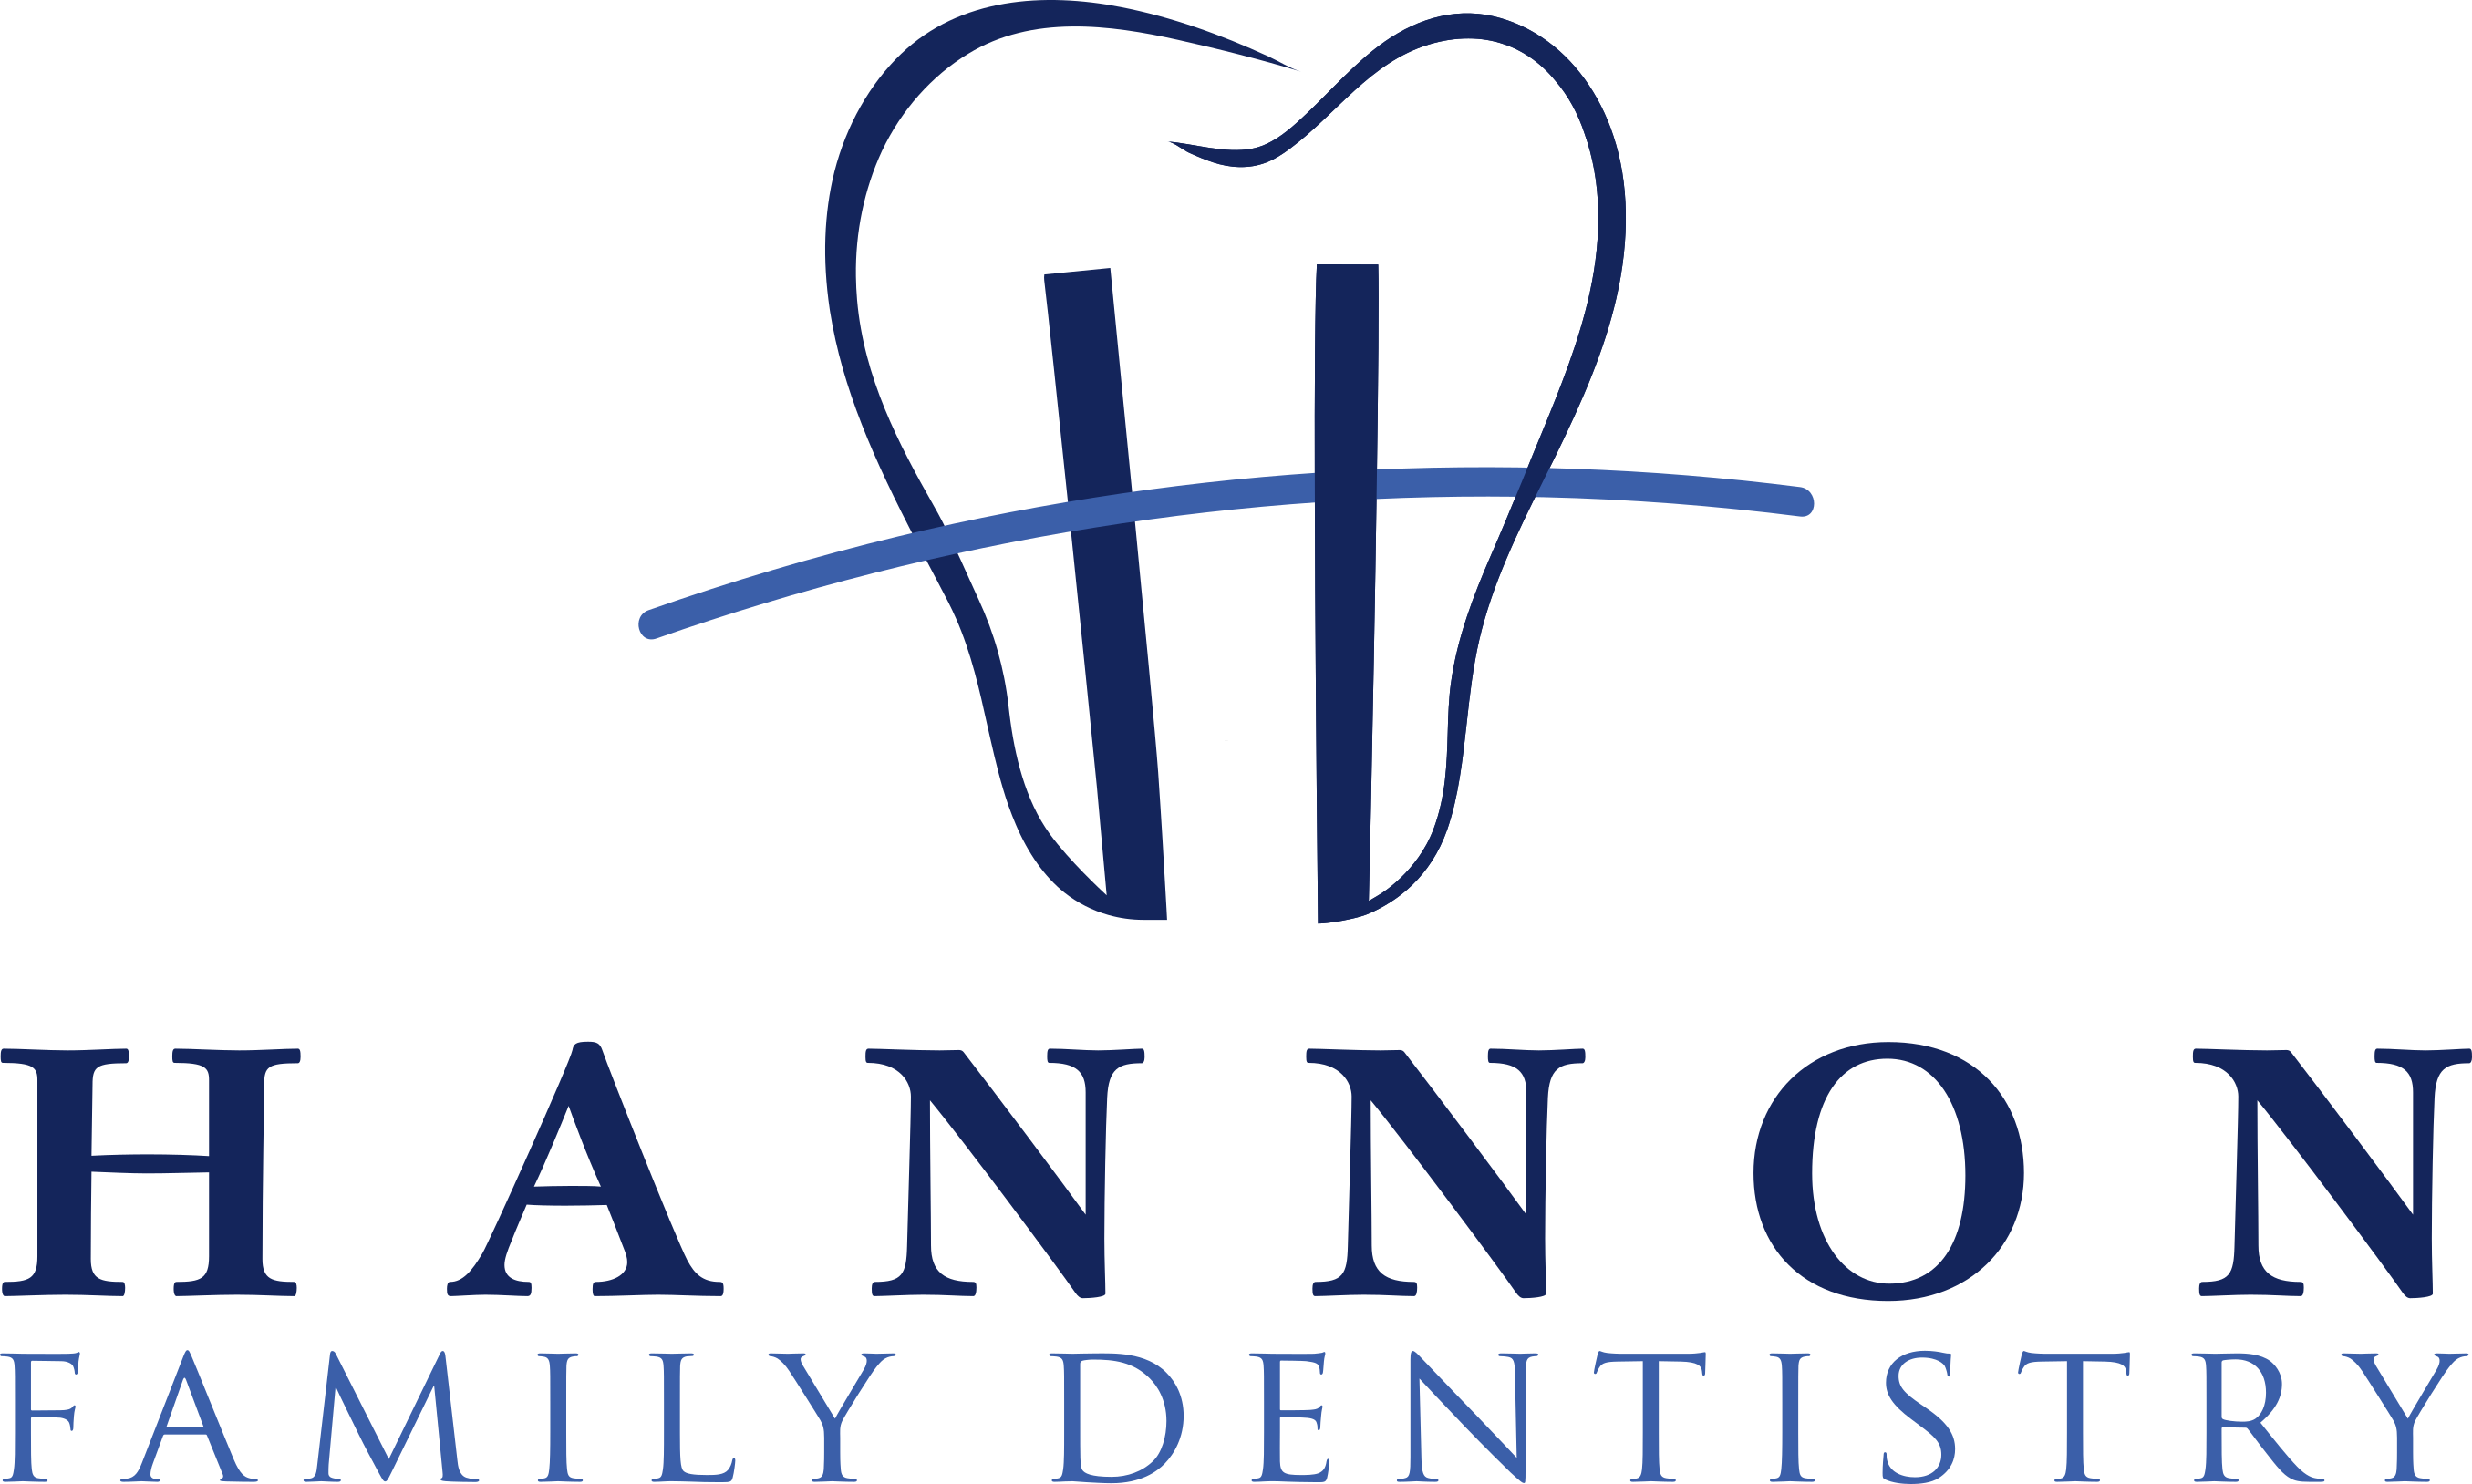 Hannon Family Dentistry